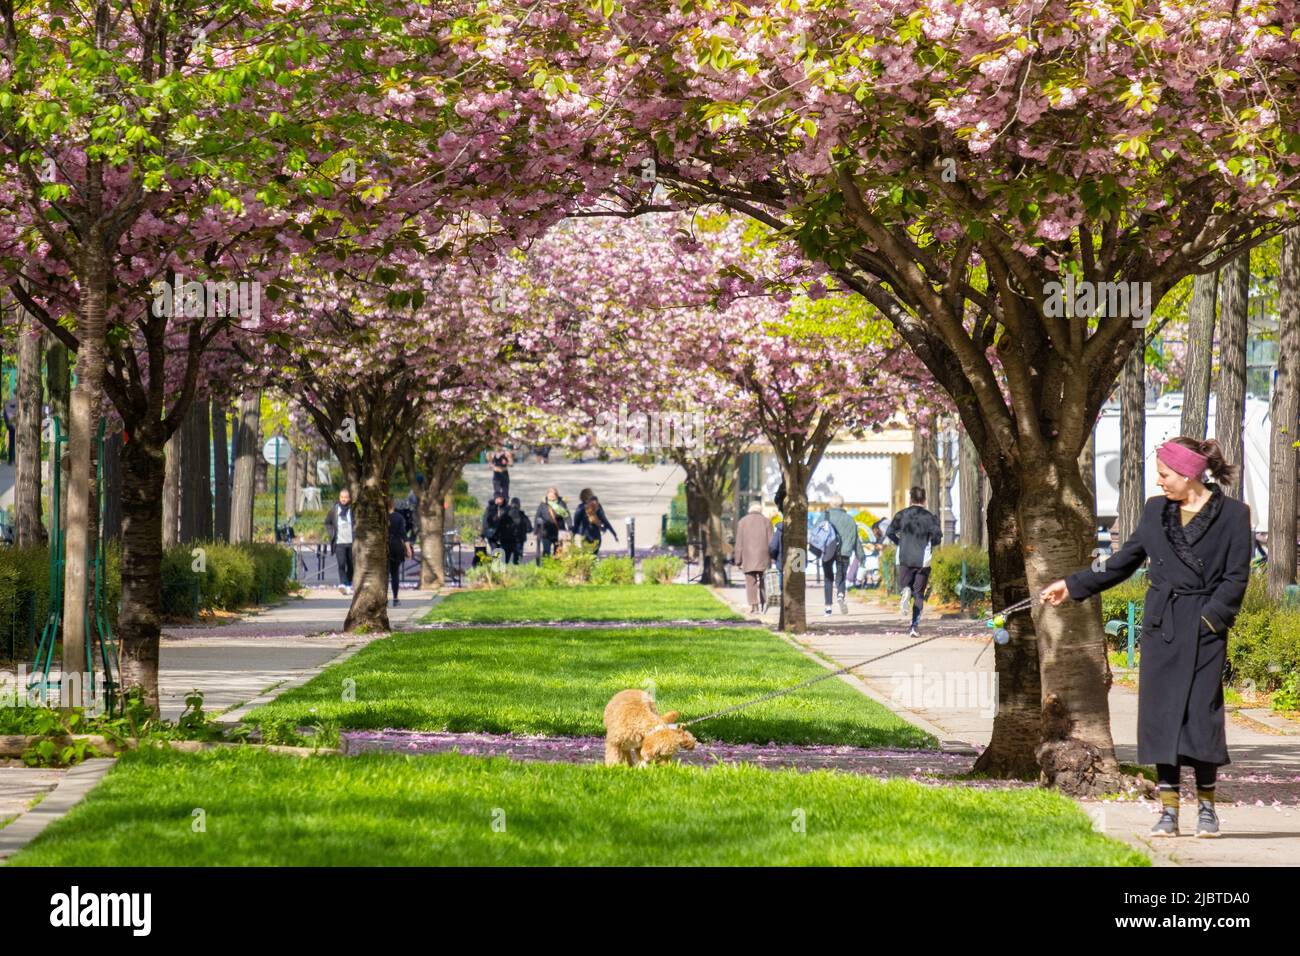 France, Paris, Vivaldi alley, 12th, cherry blossoms Stock Photo